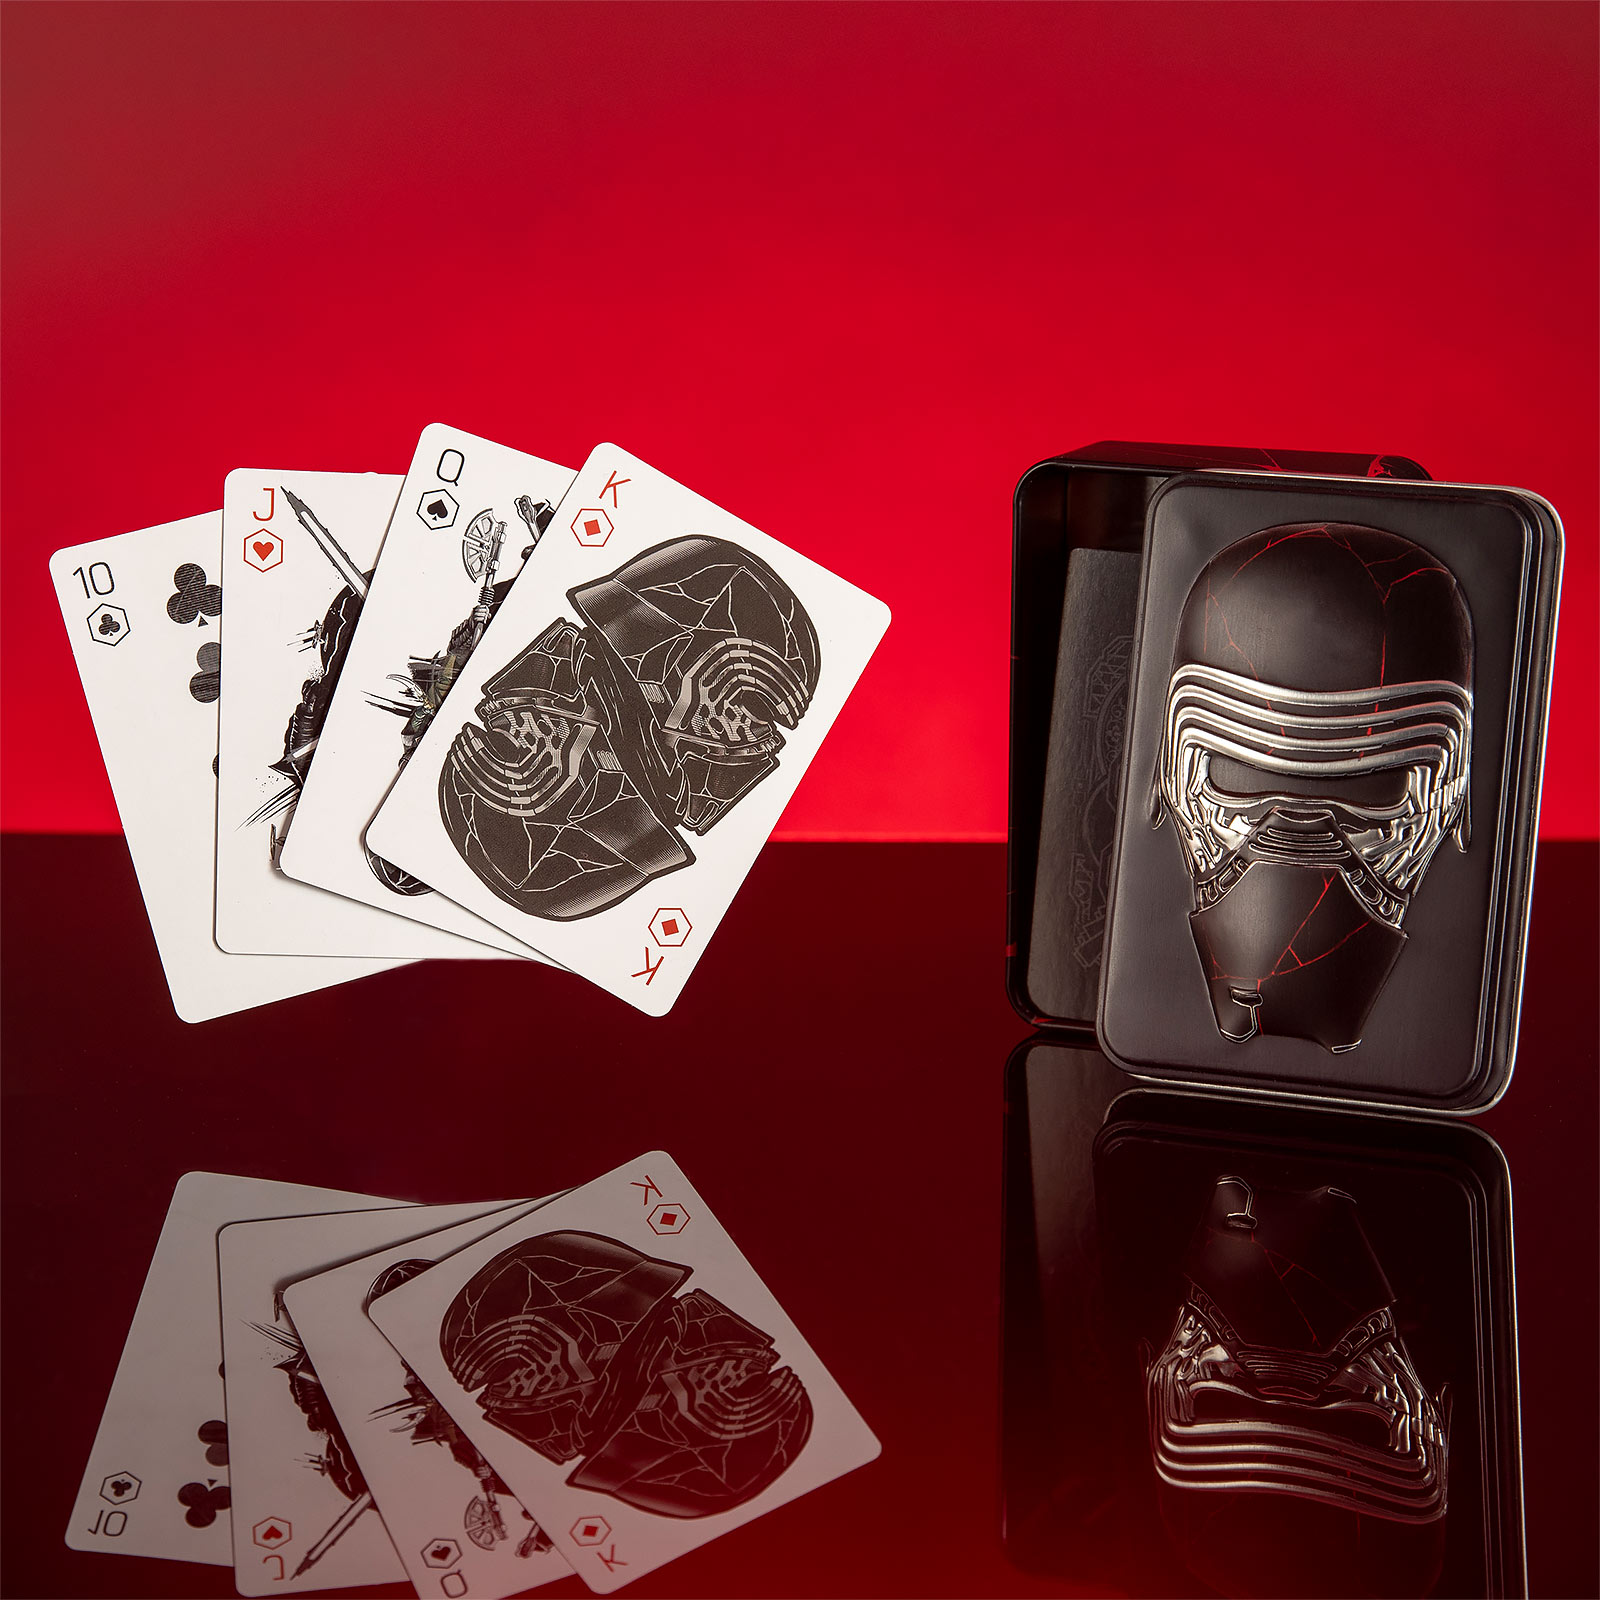 Star Wars - Jeu de cartes Kylo Ren en boîte métallique